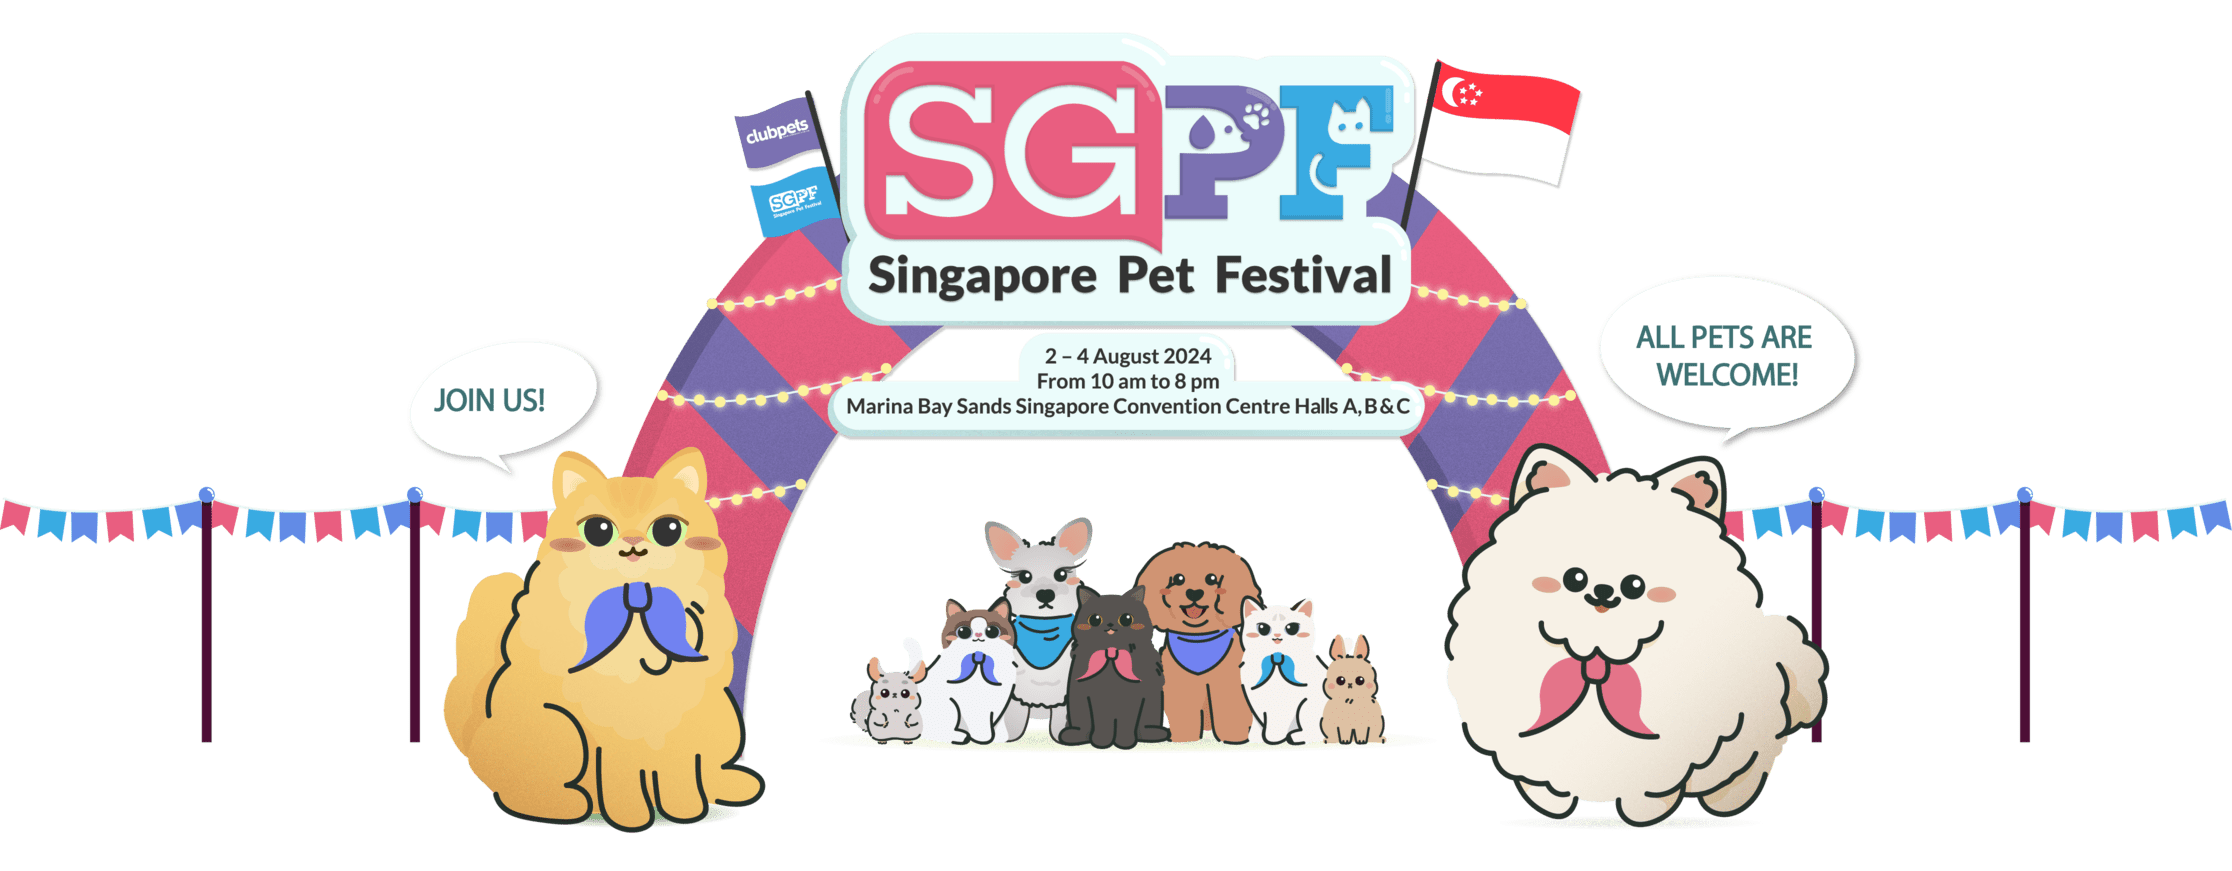 sgpf - Singapore Pet Festival 2024